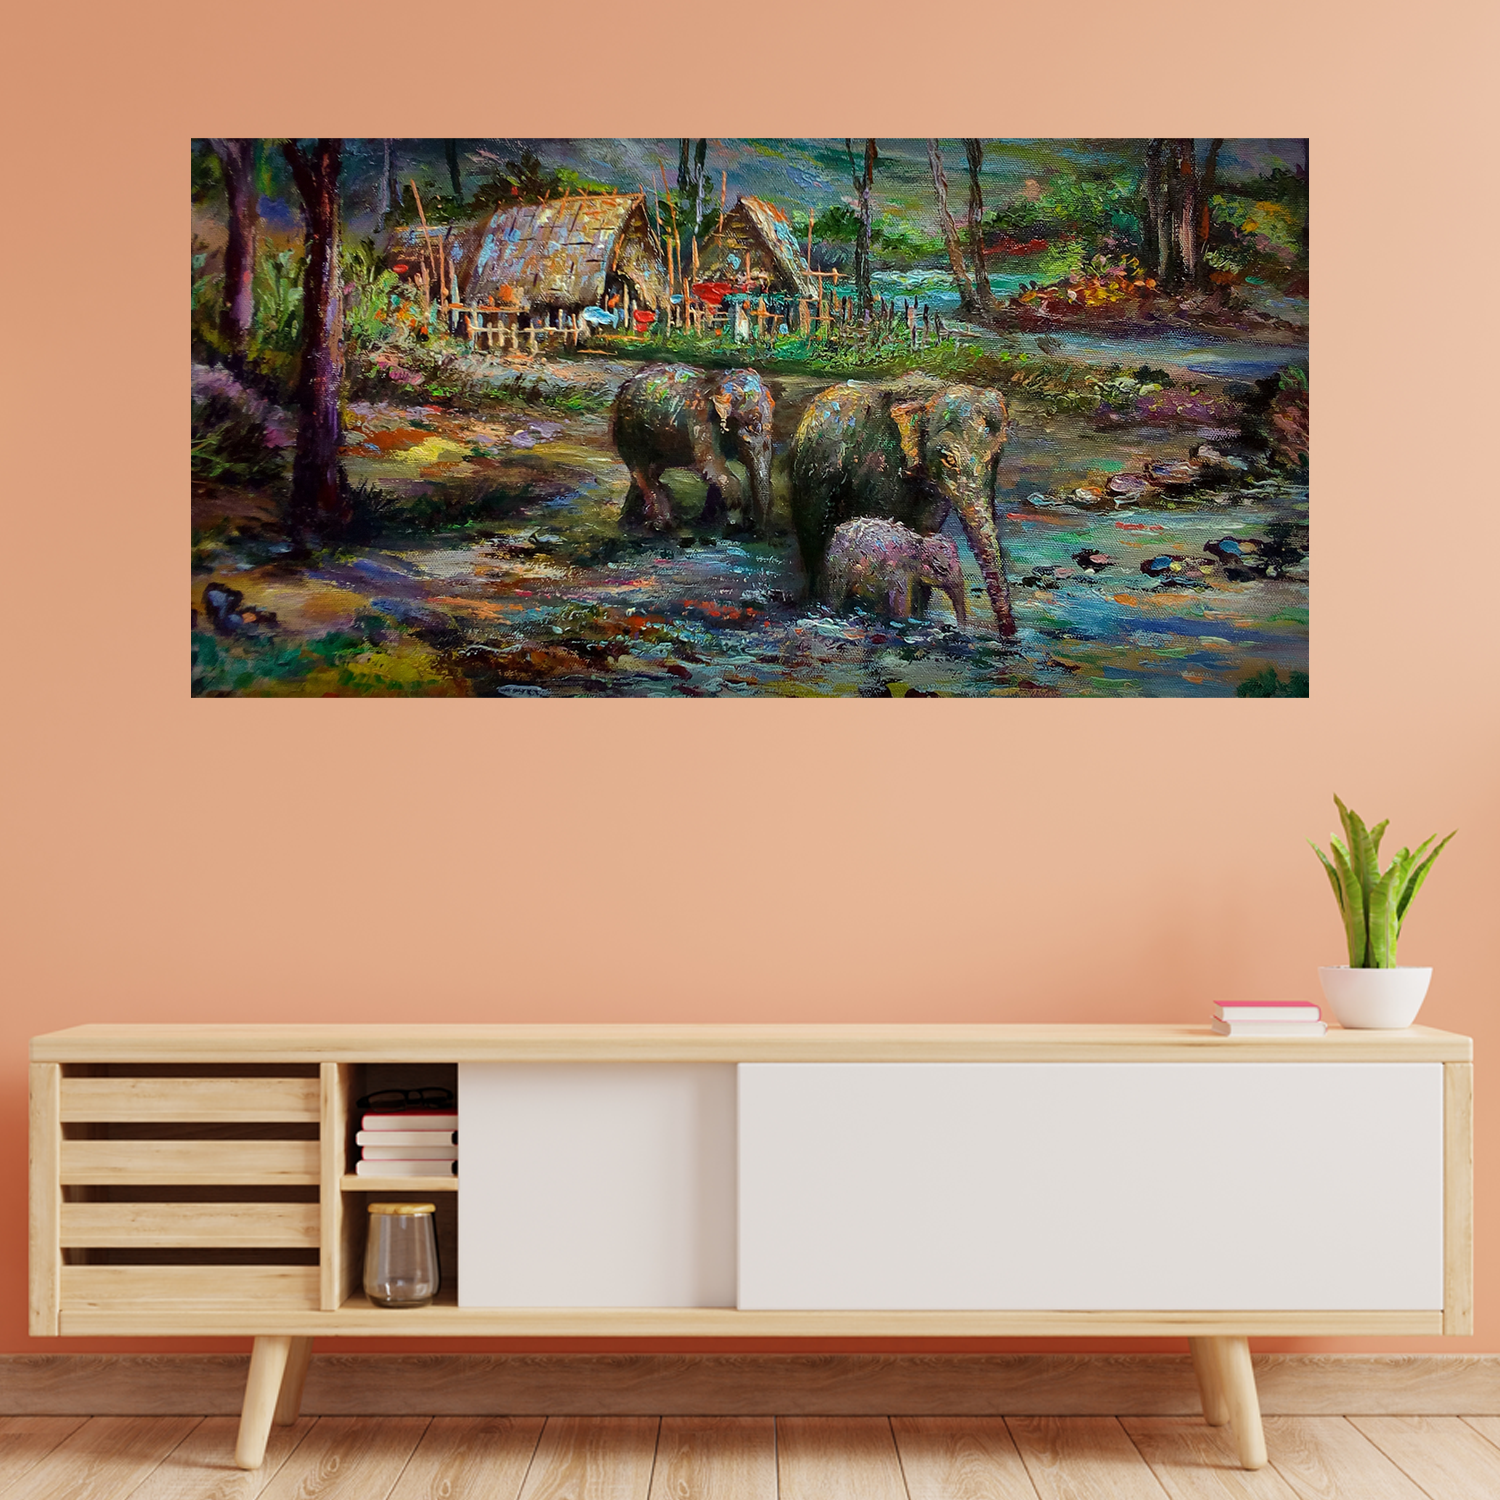 Elephants Animal Canvas Wall Painting